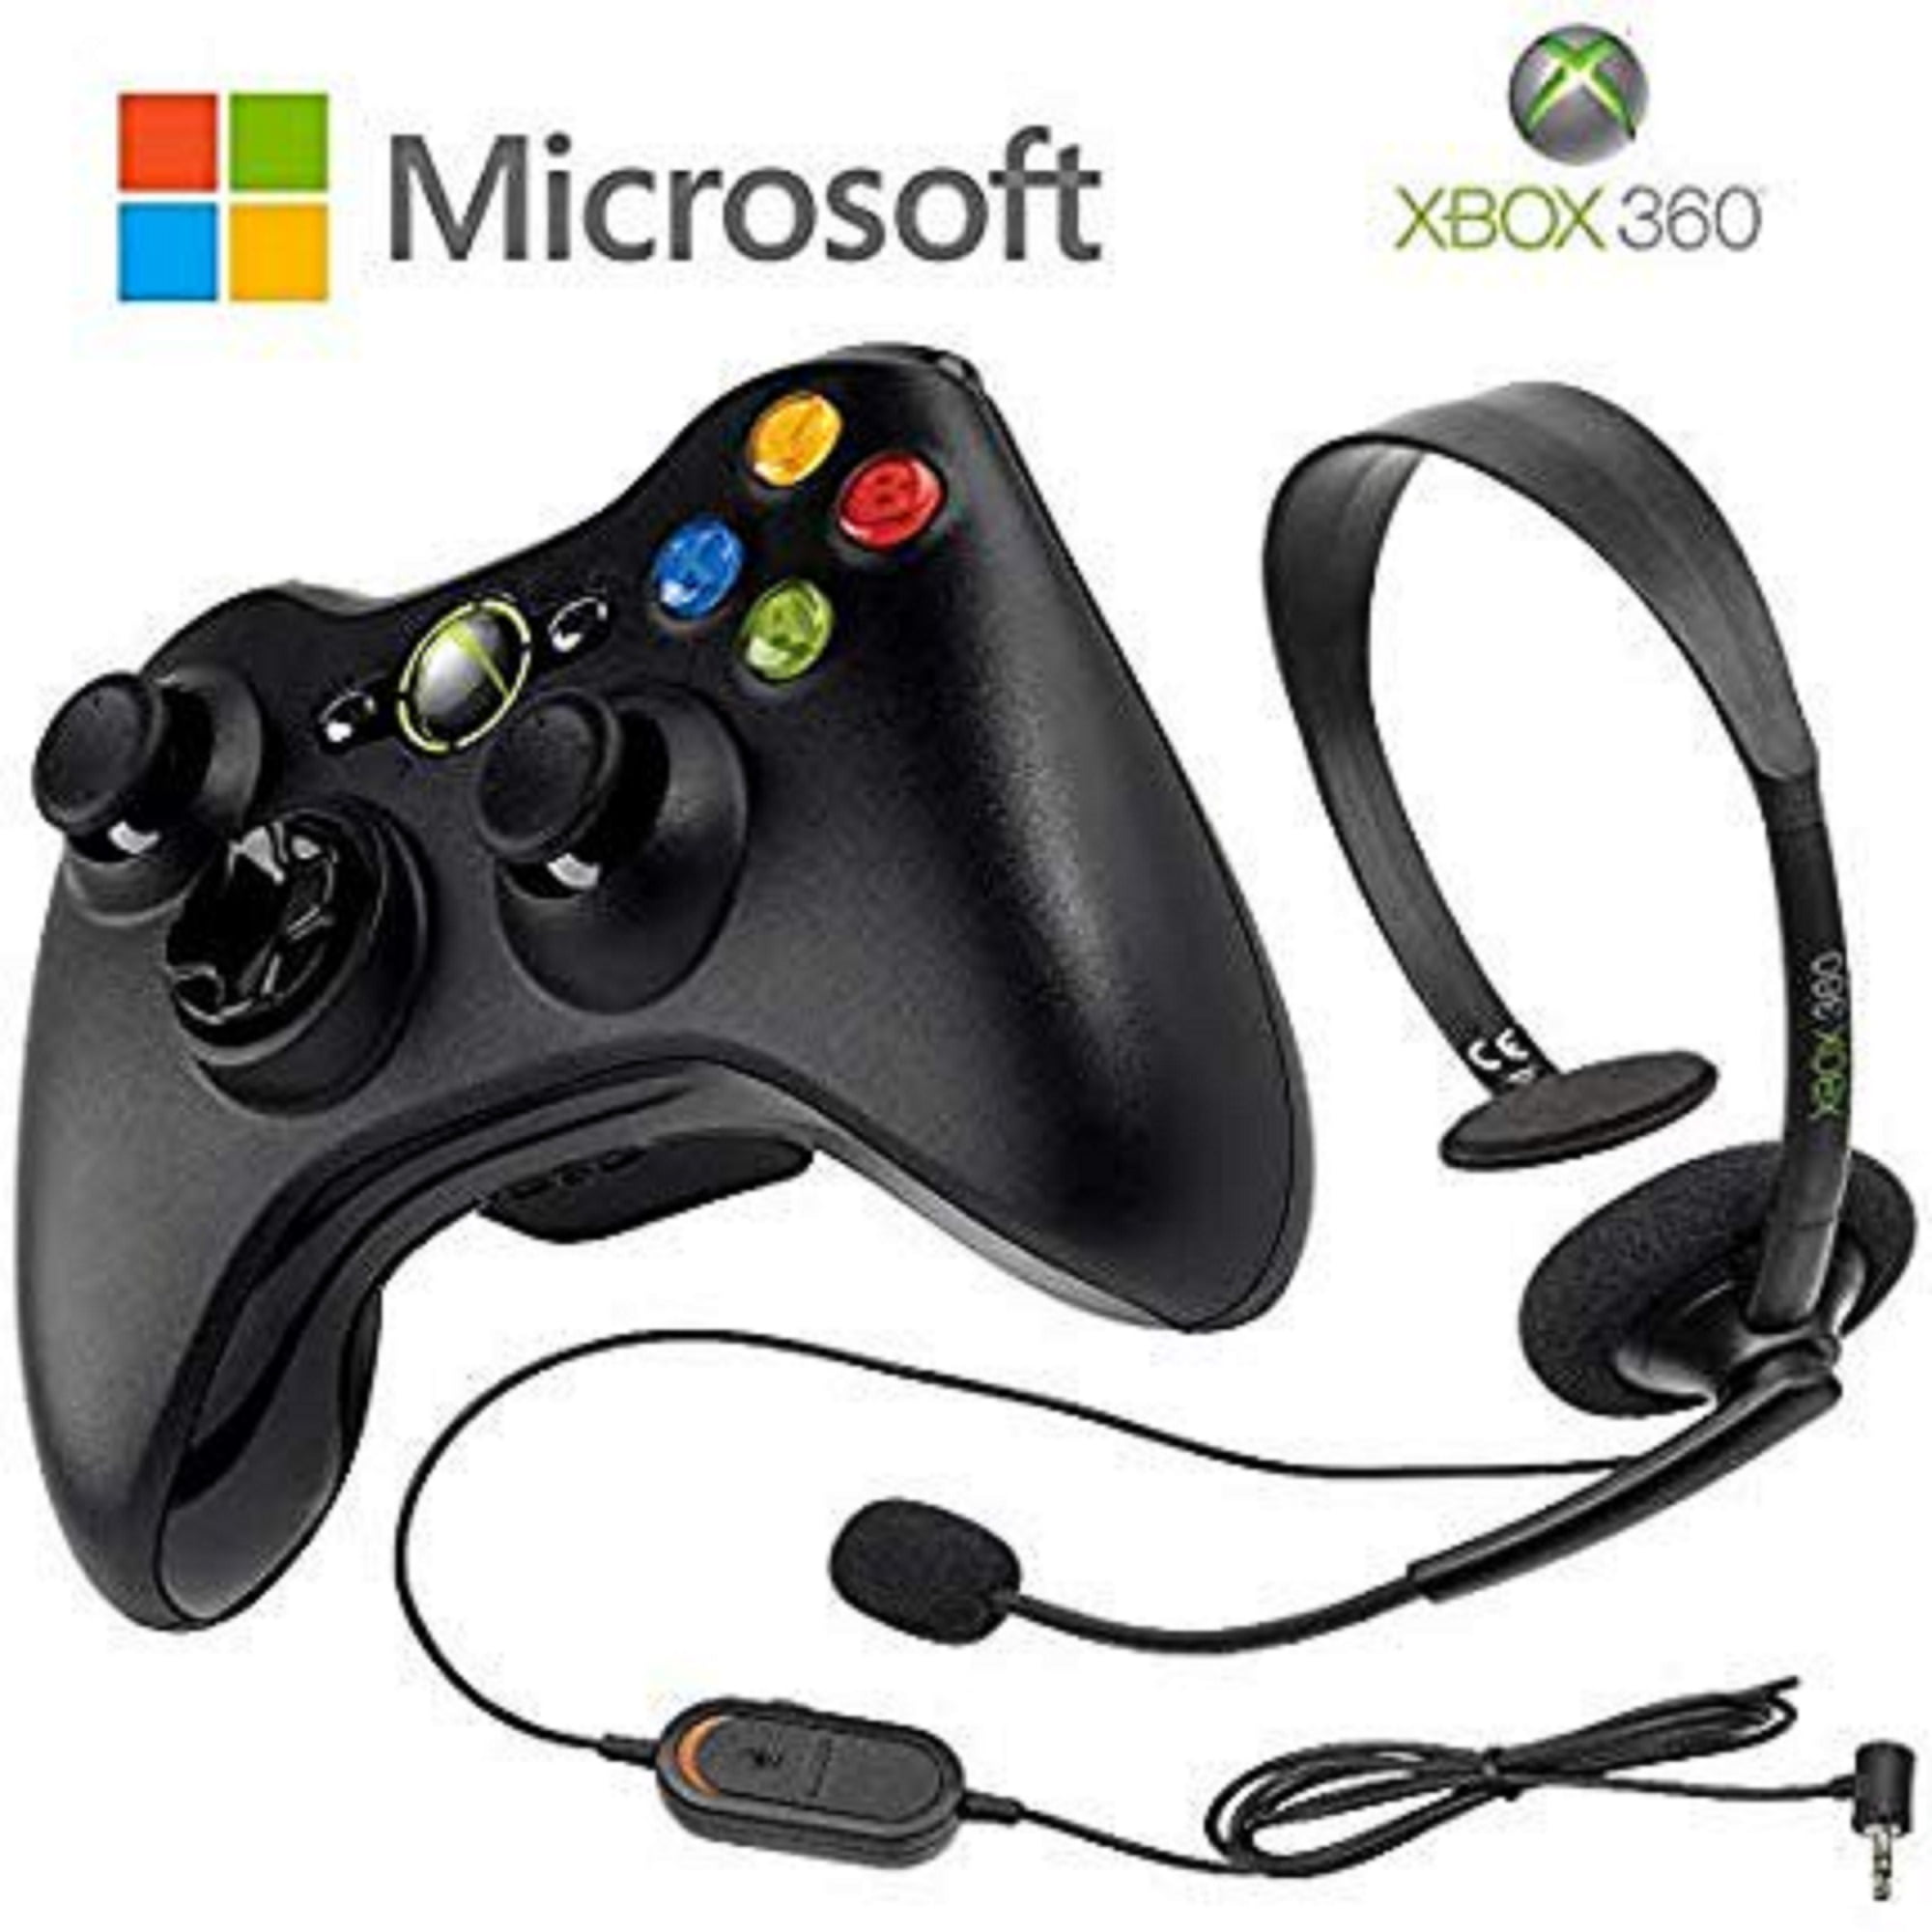 %100 Official Genuine Microsoft Xbox 360 Wireless Controller Black plus  Headset - Walmart.com